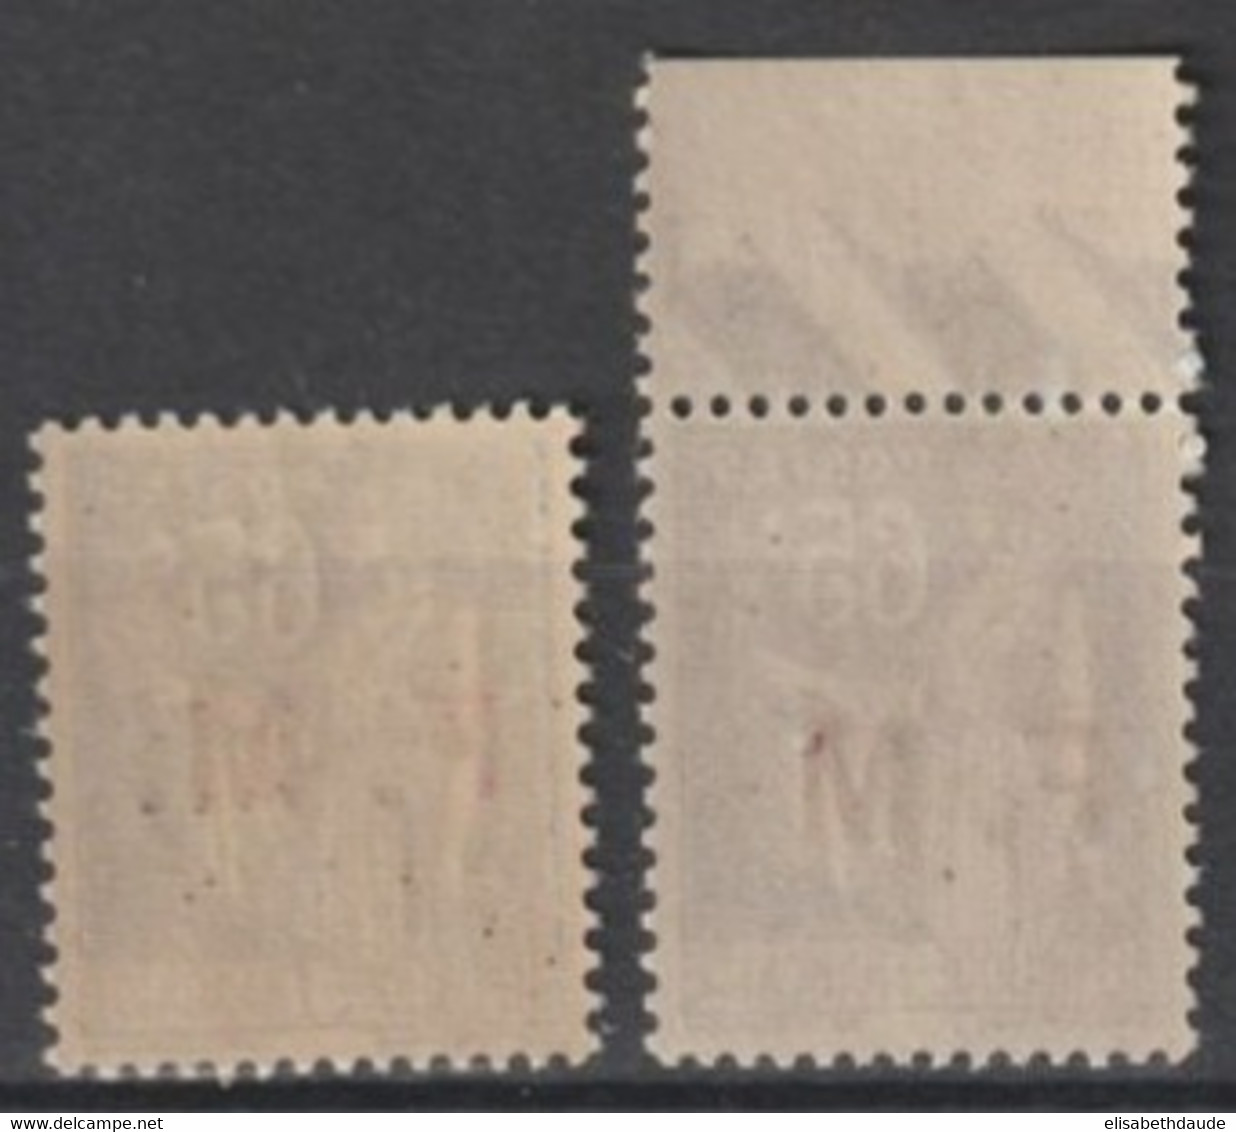 1937 - FM - VARIETE SANS POINT APRES M + NORMAL ! YVERT N°8+8a ** MNH - COTE = 62.8 EUR. - - Military Postage Stamps